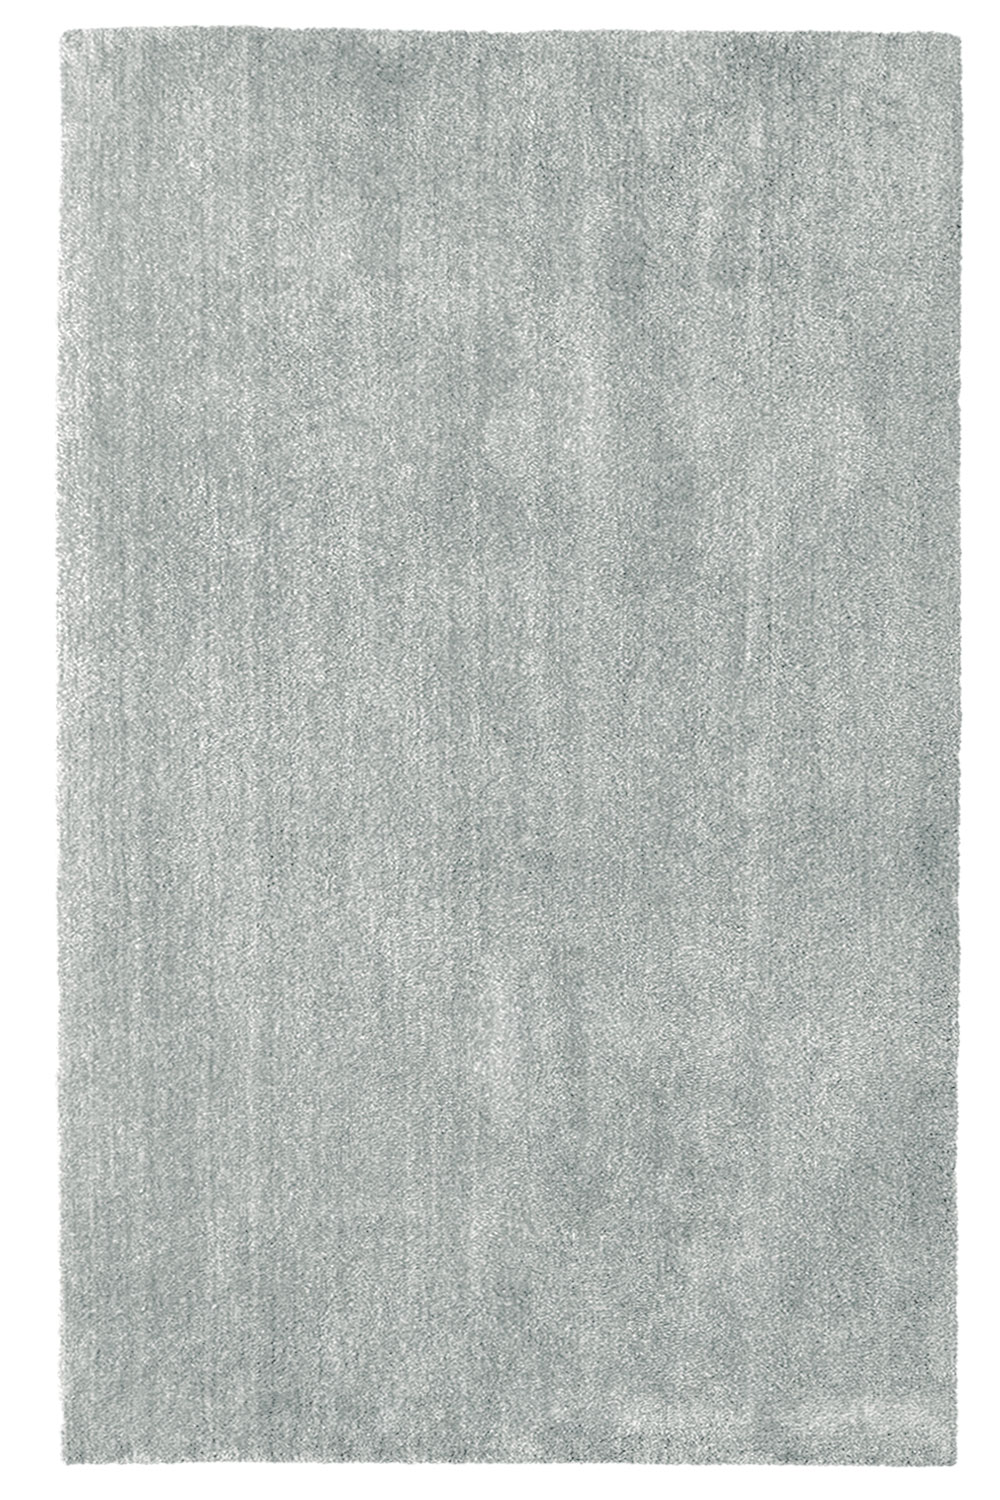 Kusový koberec Labrador 71351 060 L.Grey 240x340 cm